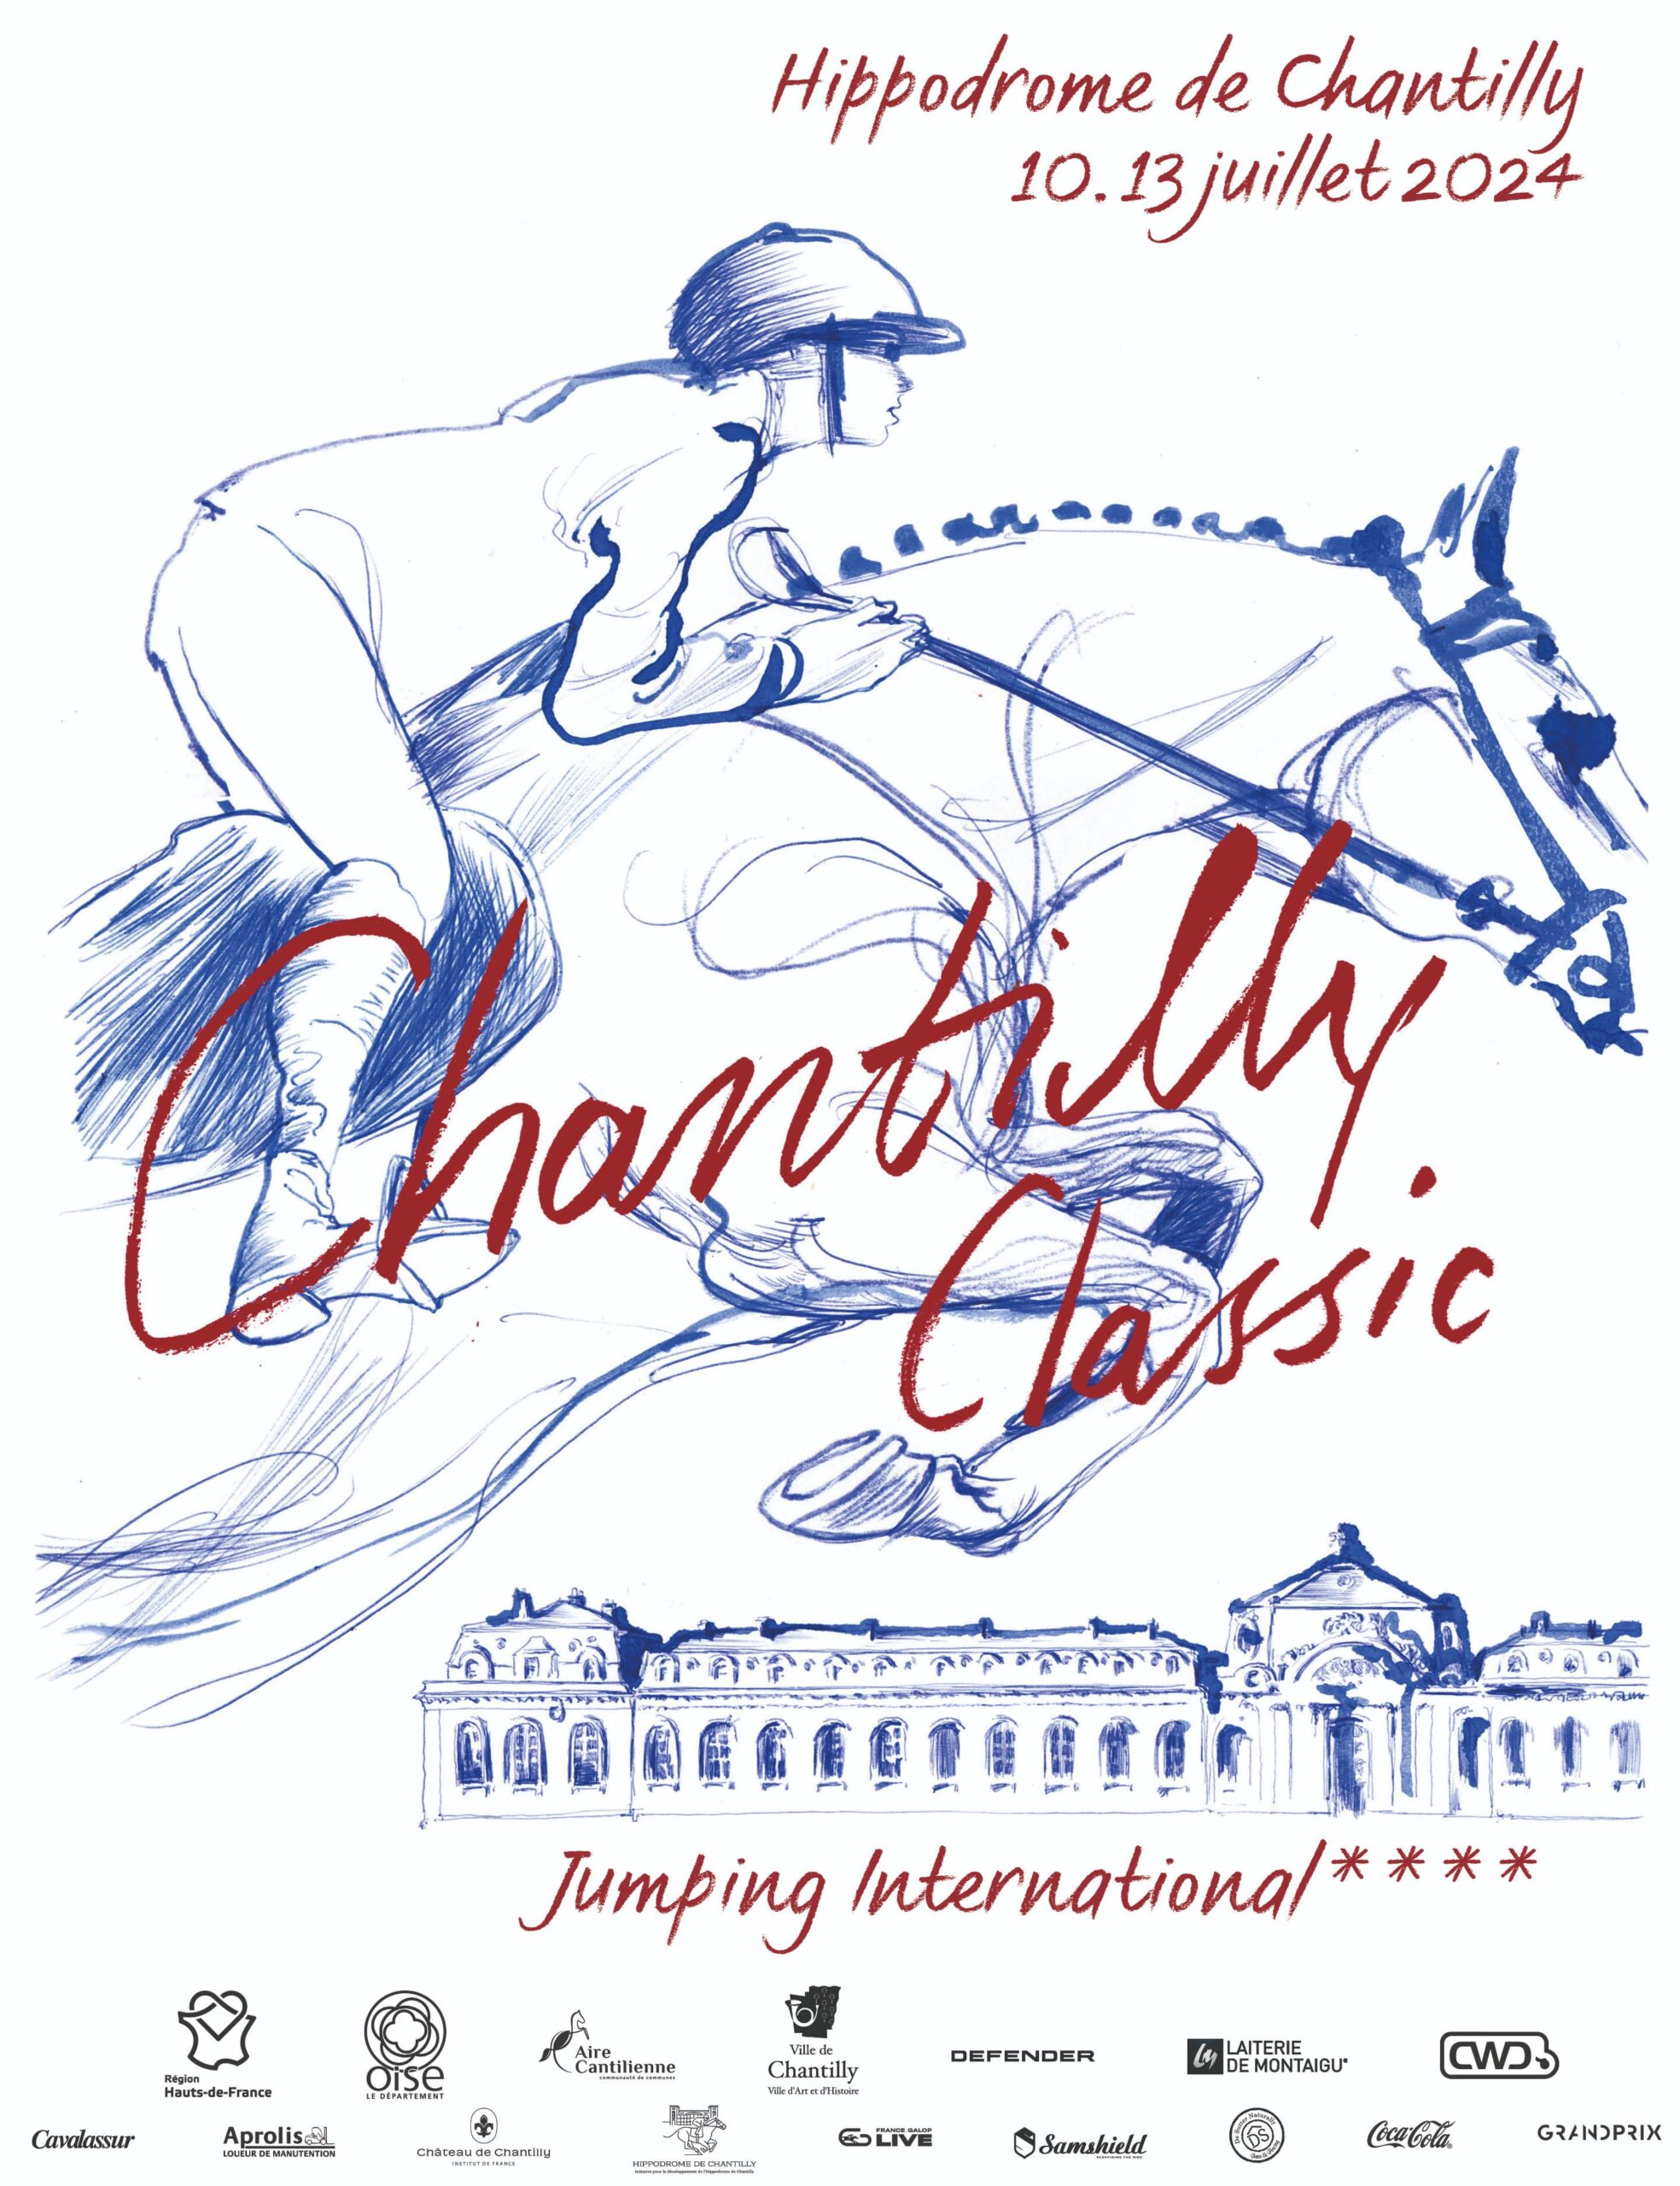 Chantilly Classic – Jumping international